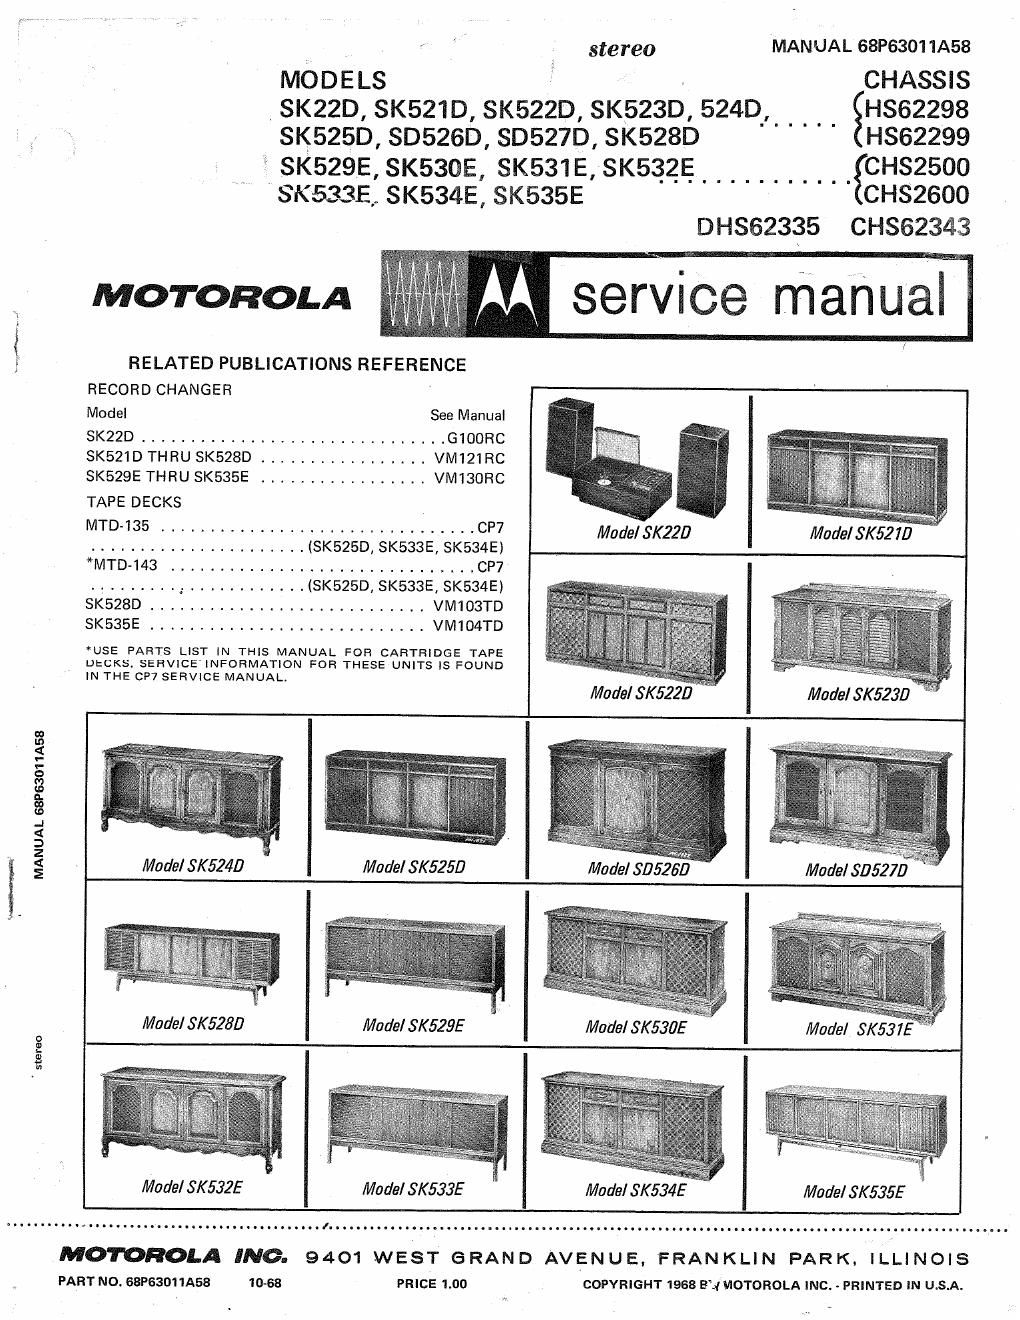 motorola sk 522 d service manual